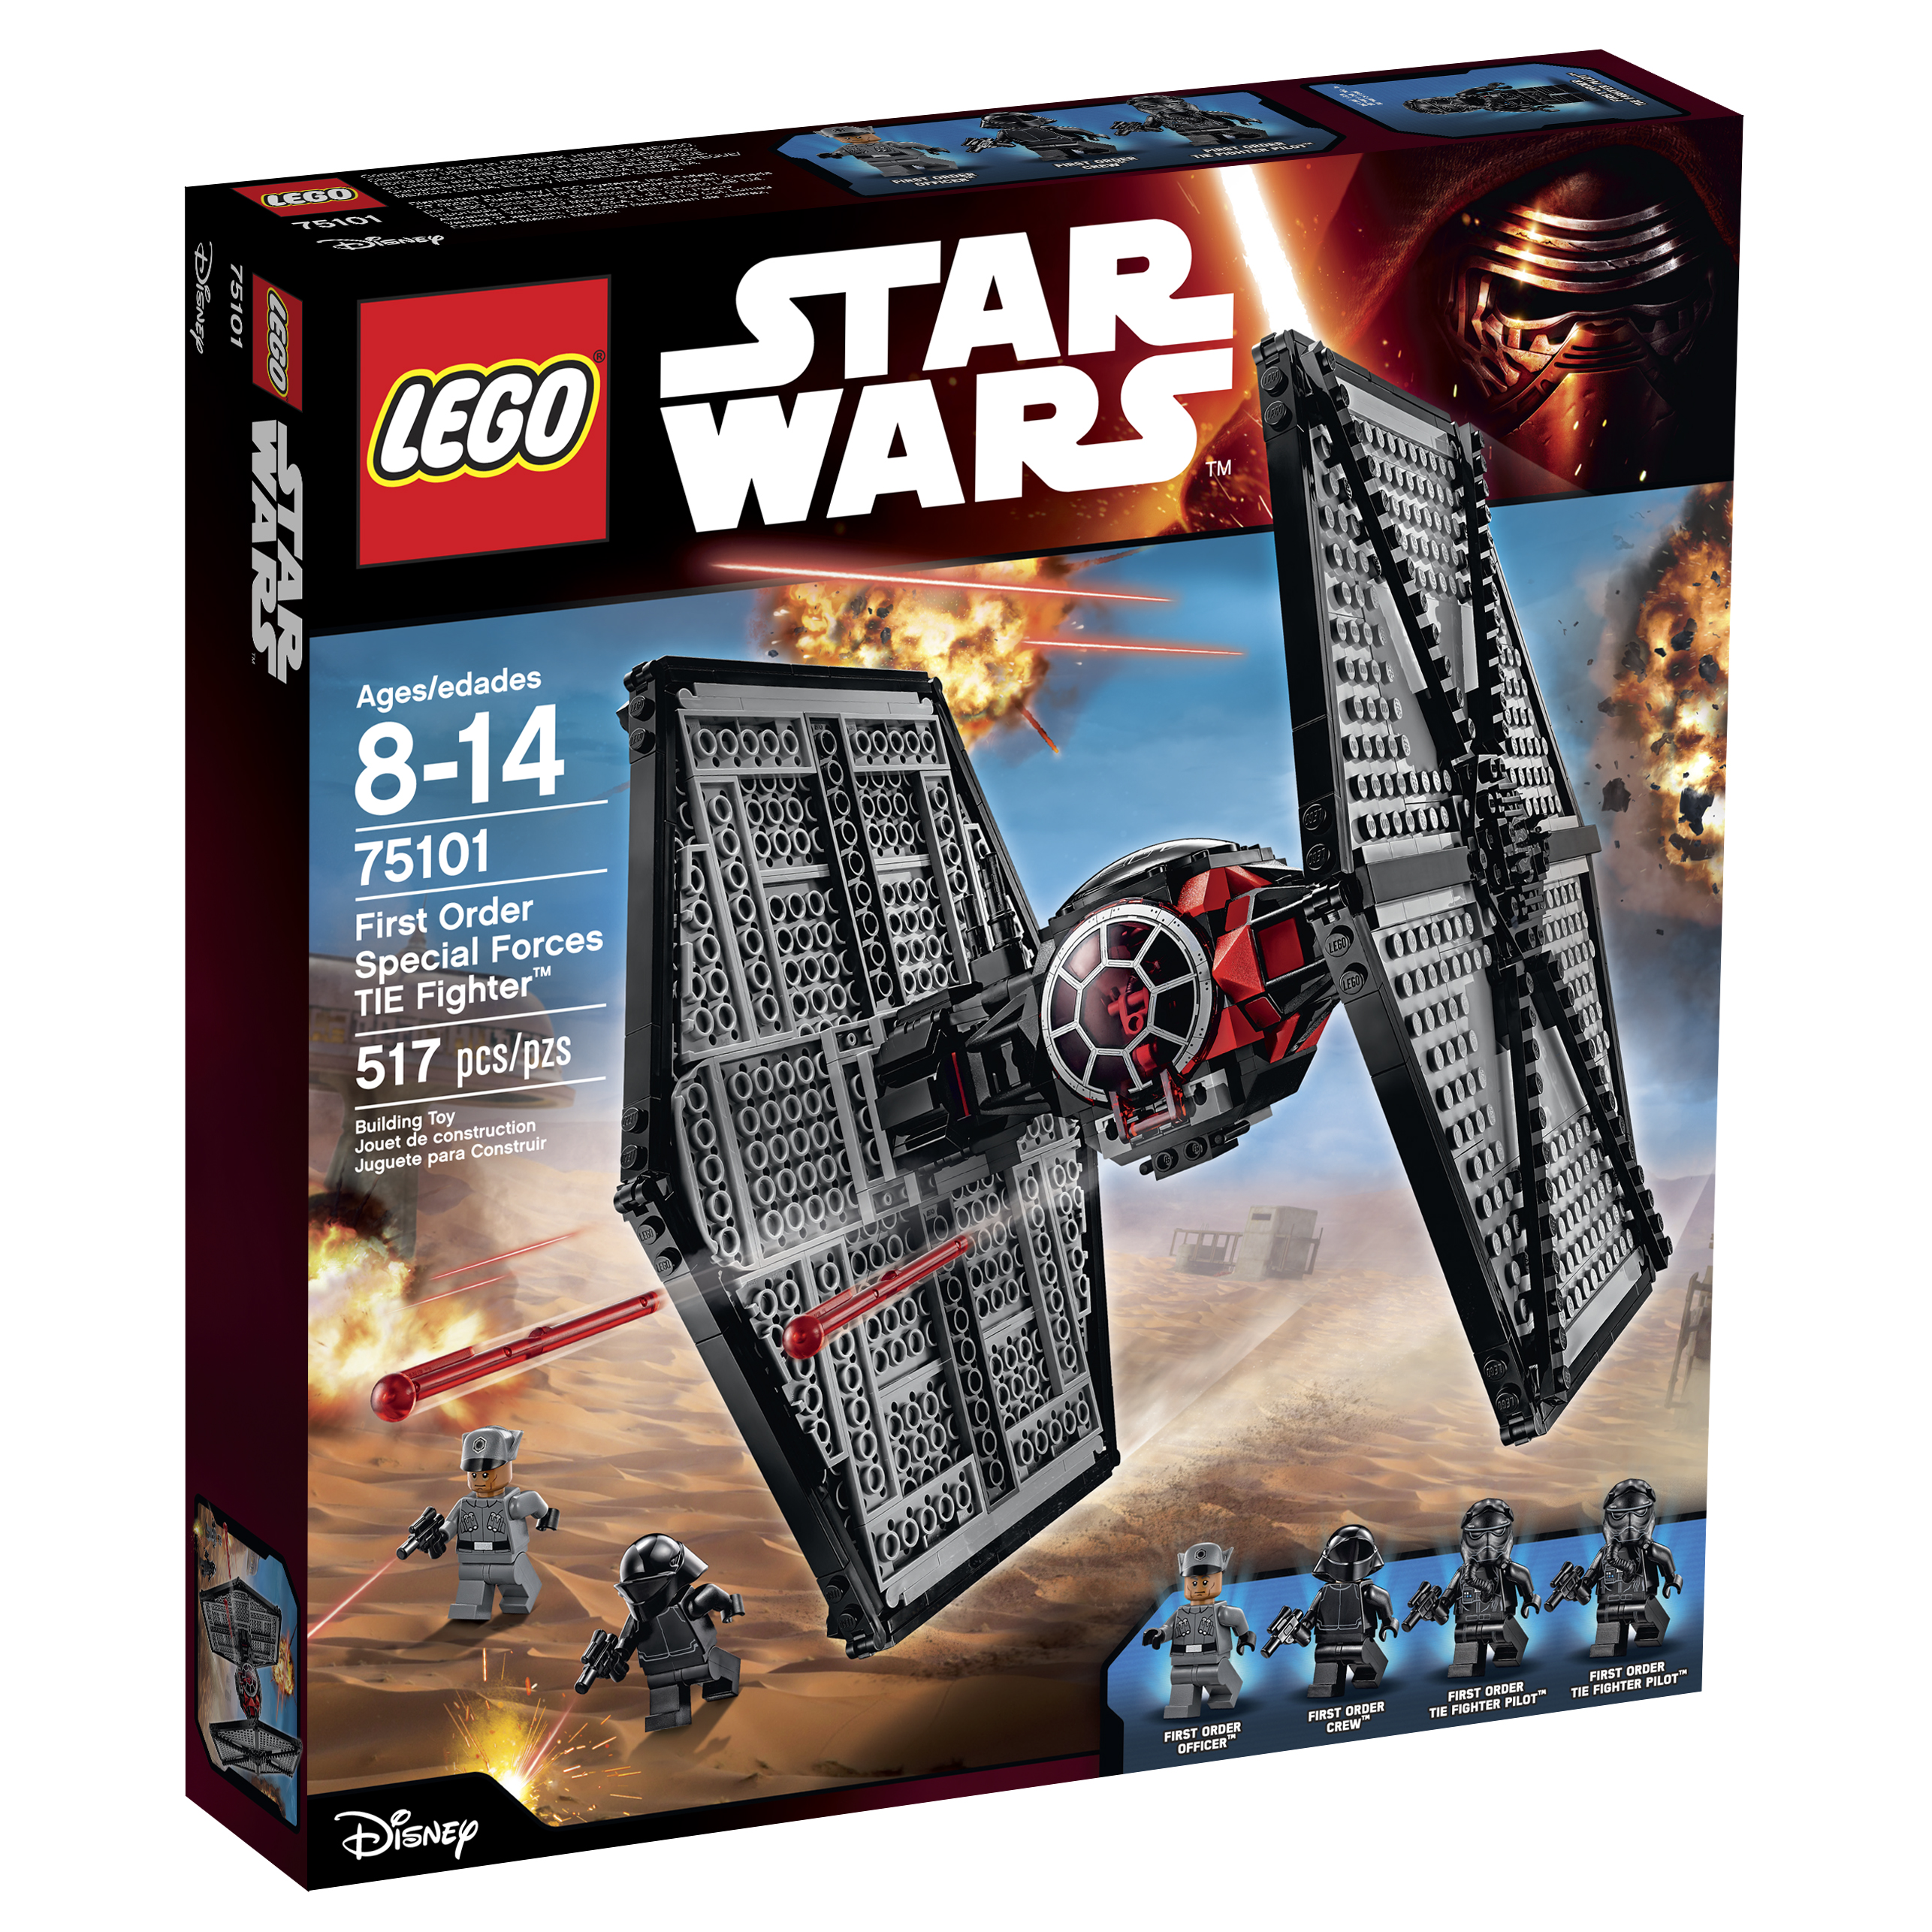 Buy LEGO Star Wars The Force Awakens Sets - FBTB